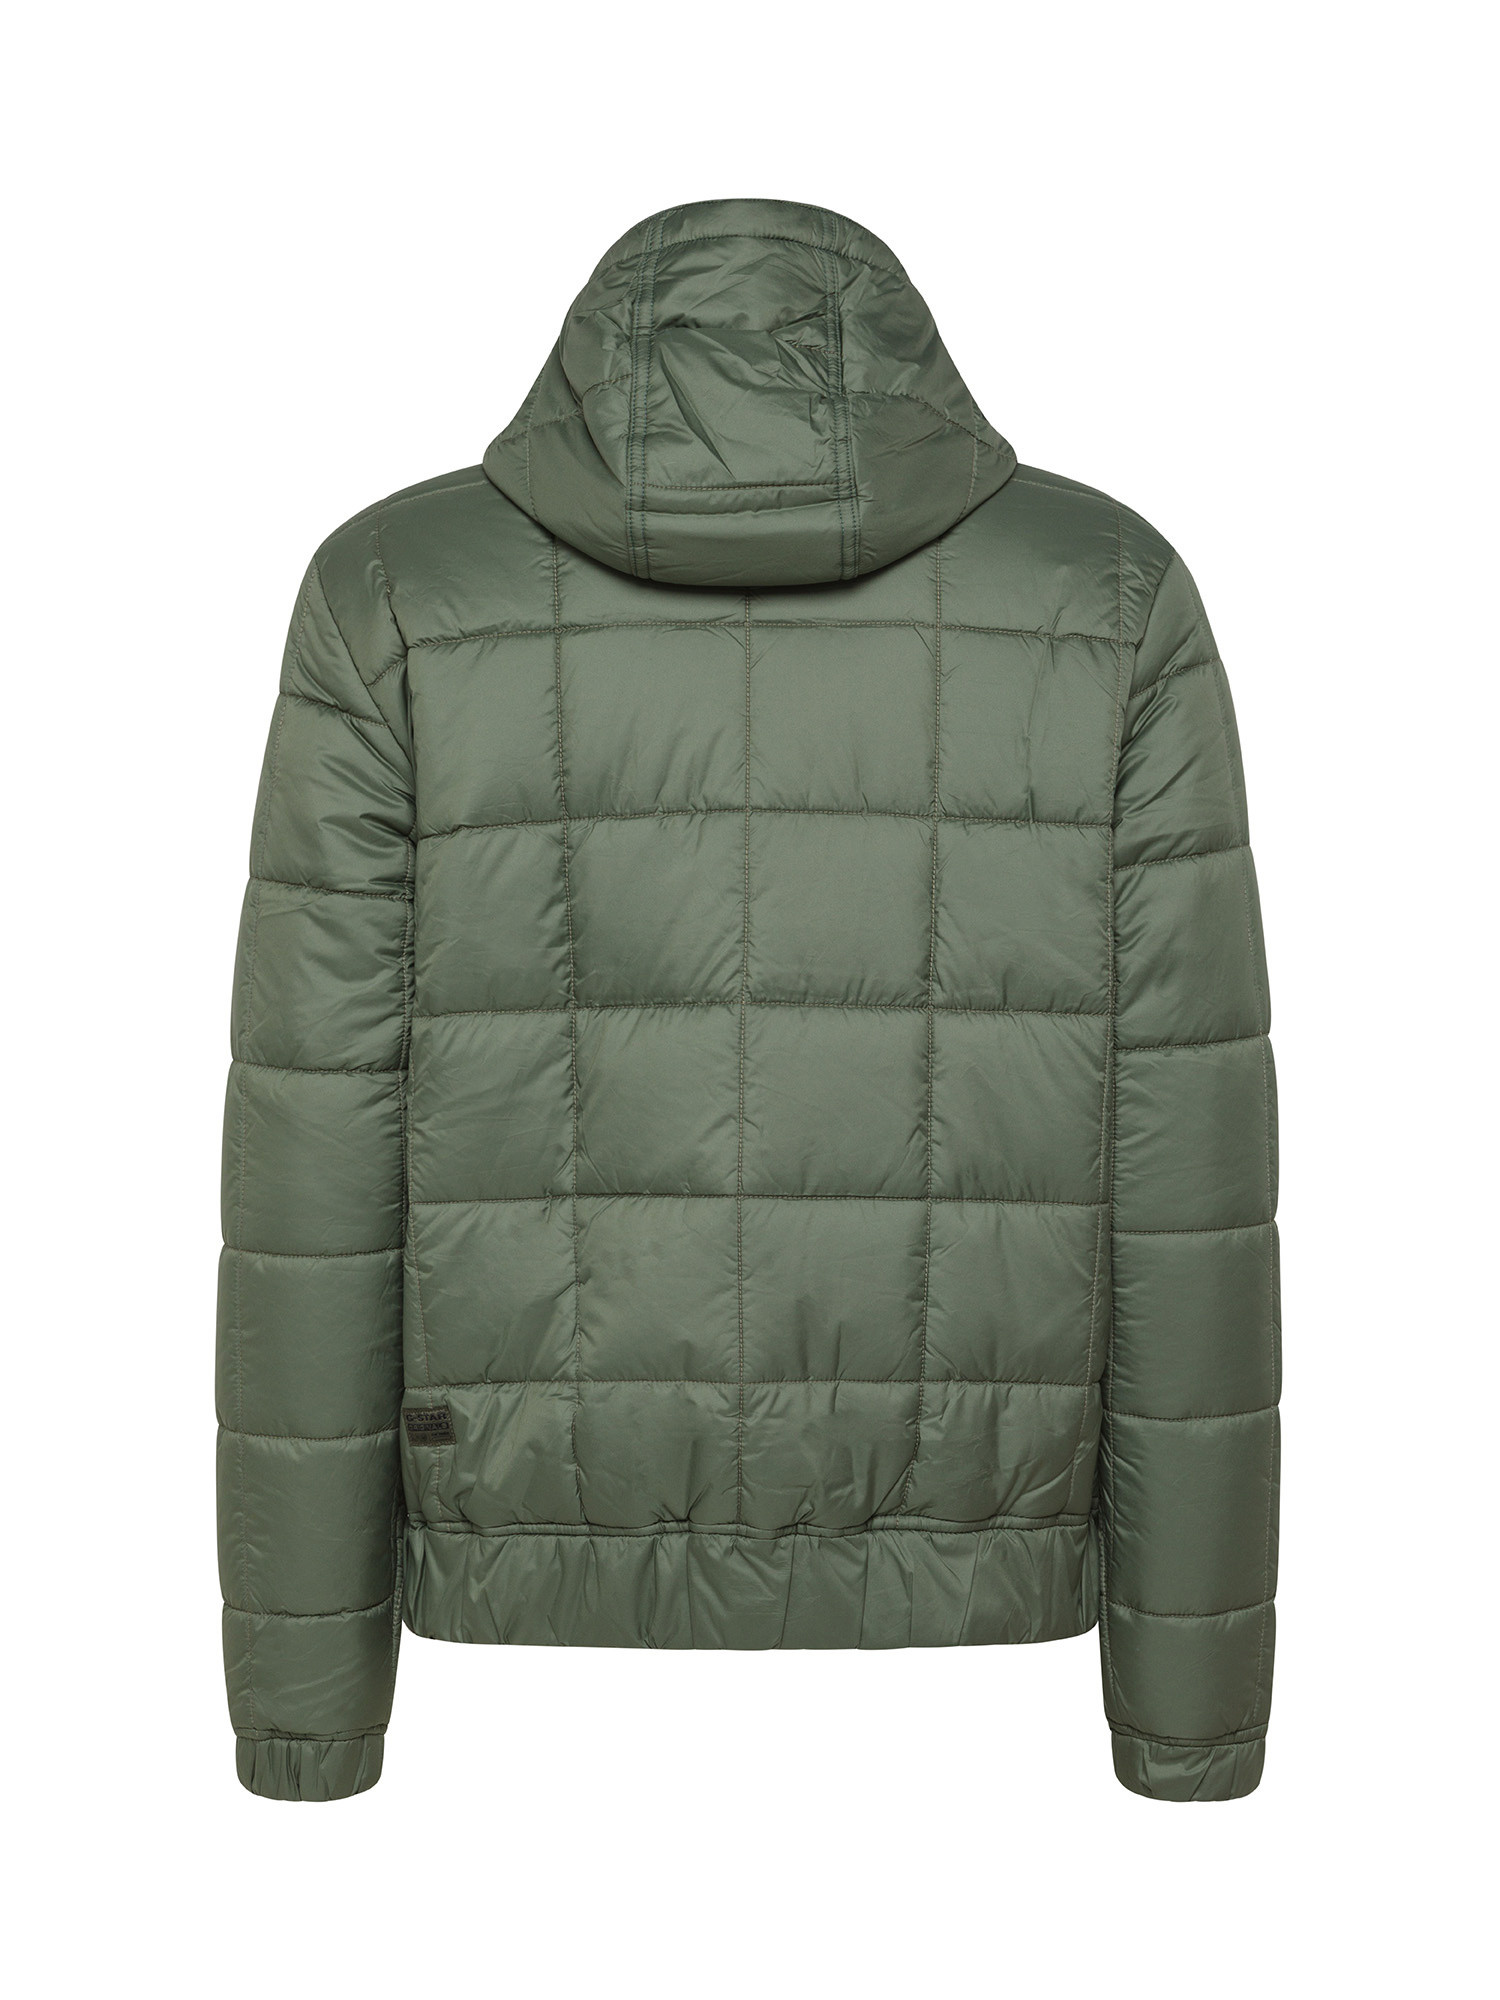 G-Star - Hooded down jacket, Olive Green, large image number 1